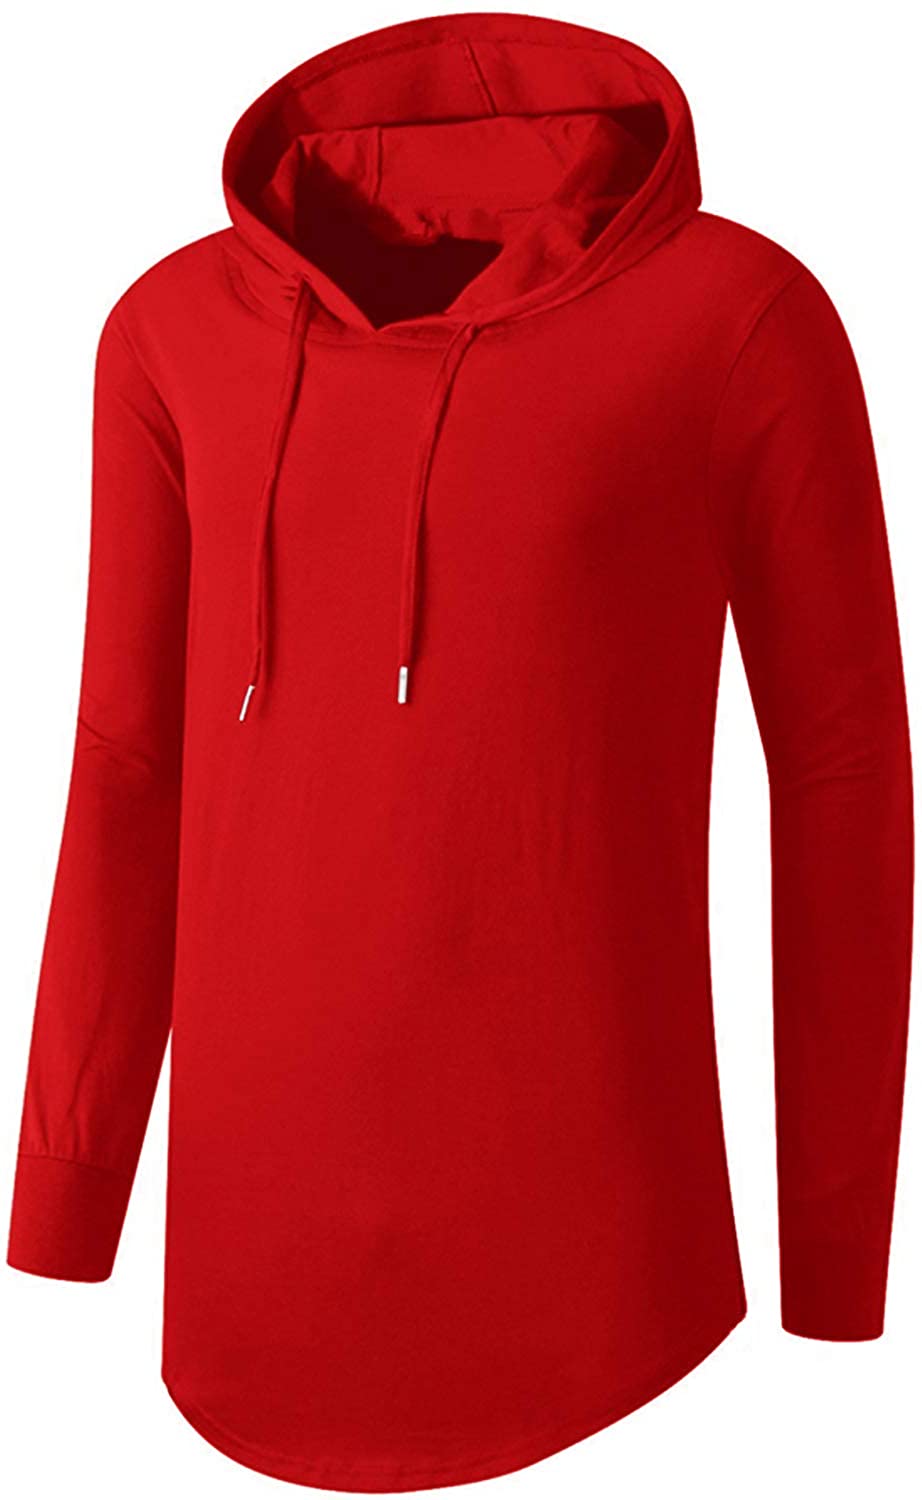 Aiyino Men's S-5X Short/Long Sleeve Fashion Athletic Hoodies Sport Sweatshirt  Pullover